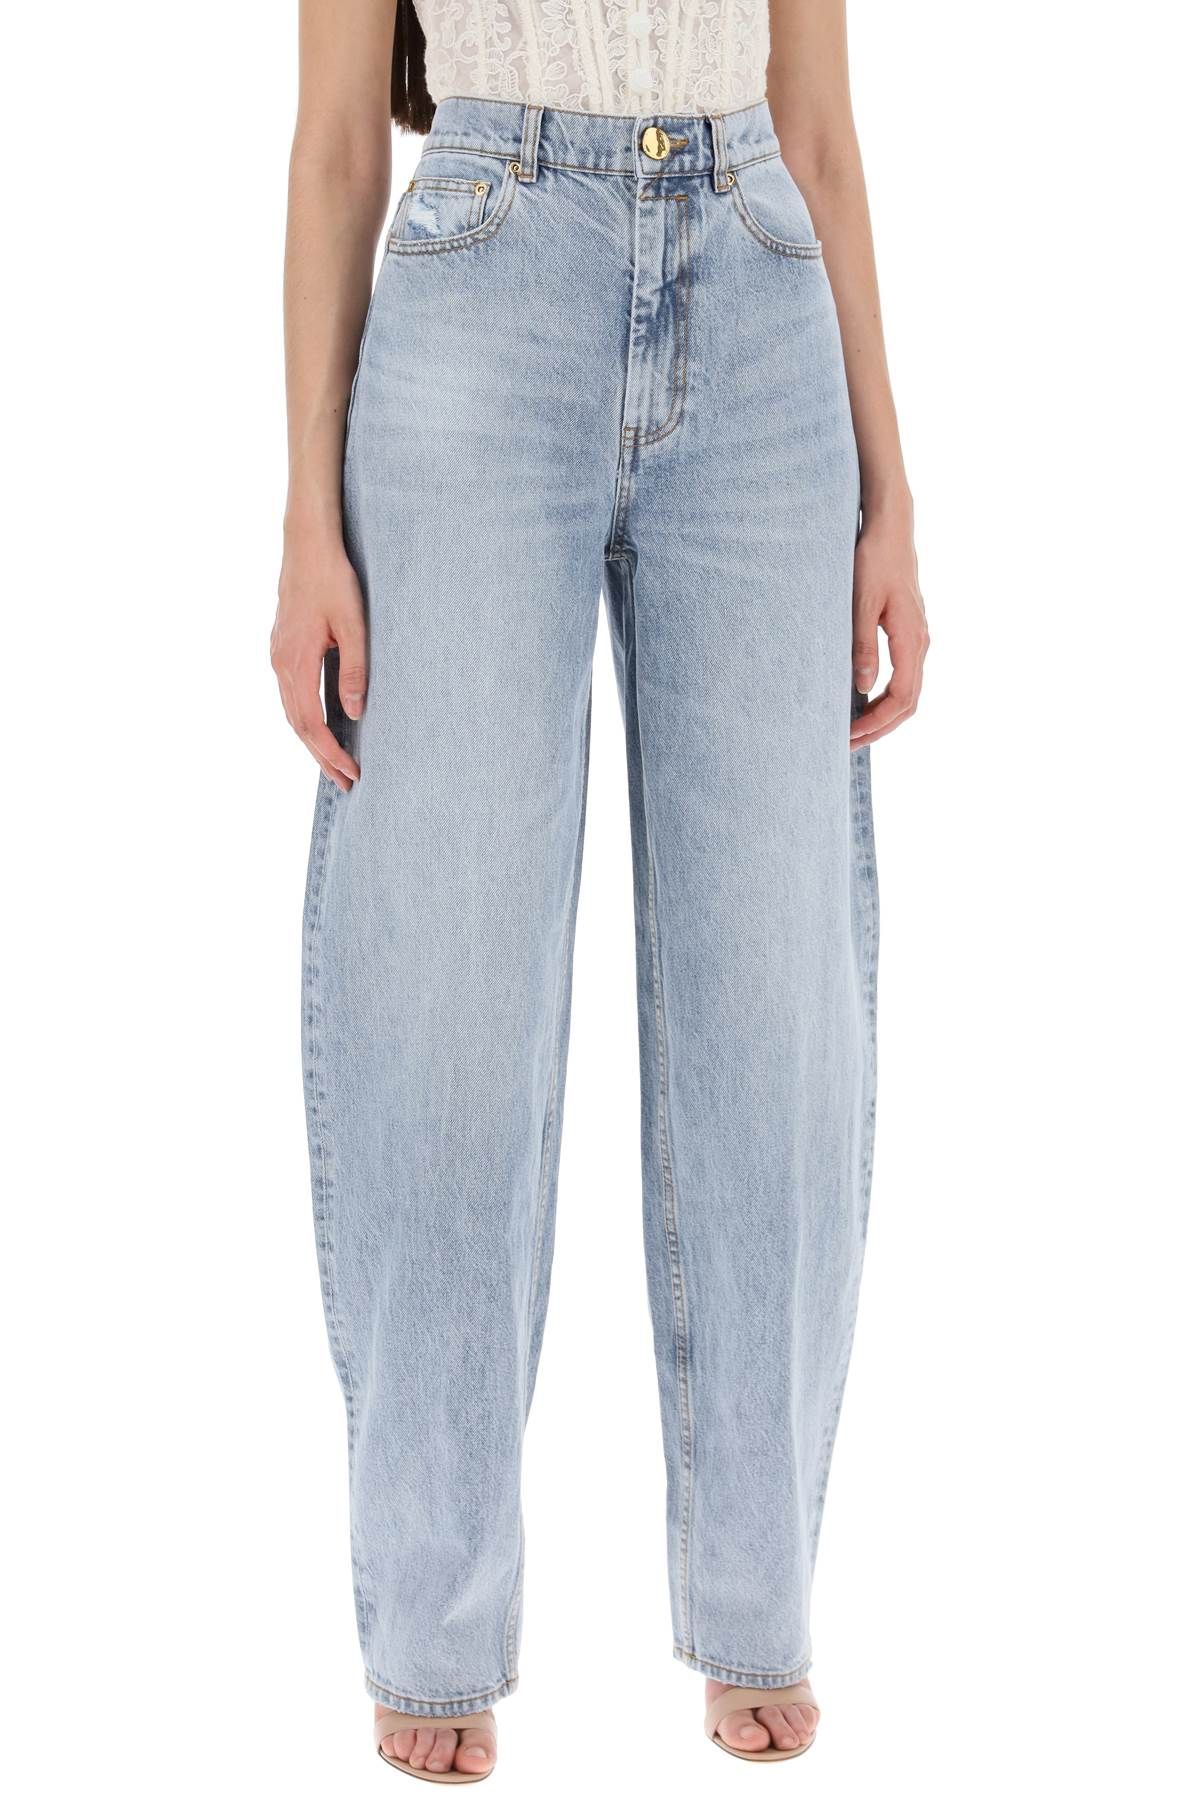 Shop Zimmermann "curved Leg Natural Jeans For In Light Blue